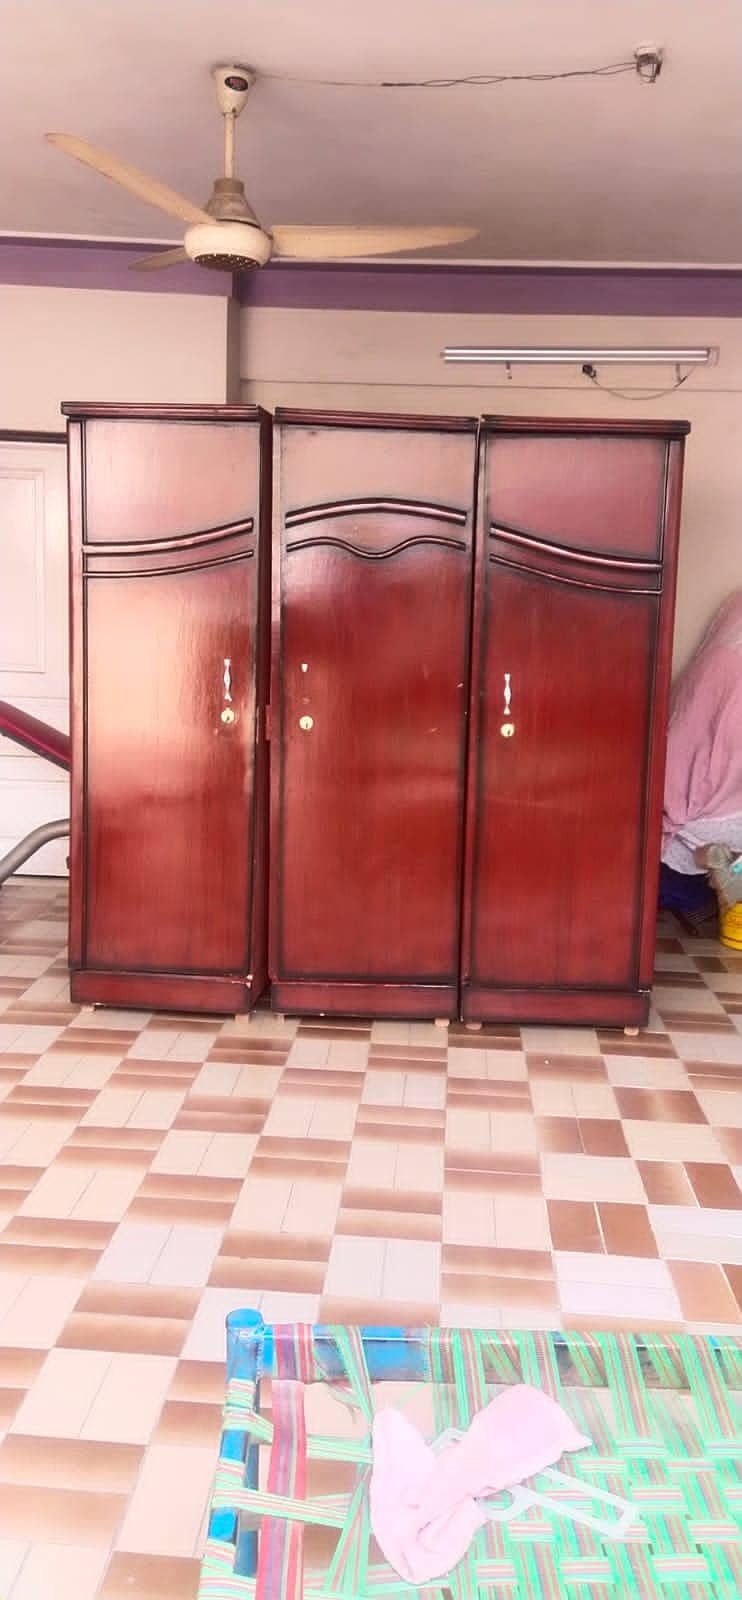 3door wardrobe for sale in excellent condition 0